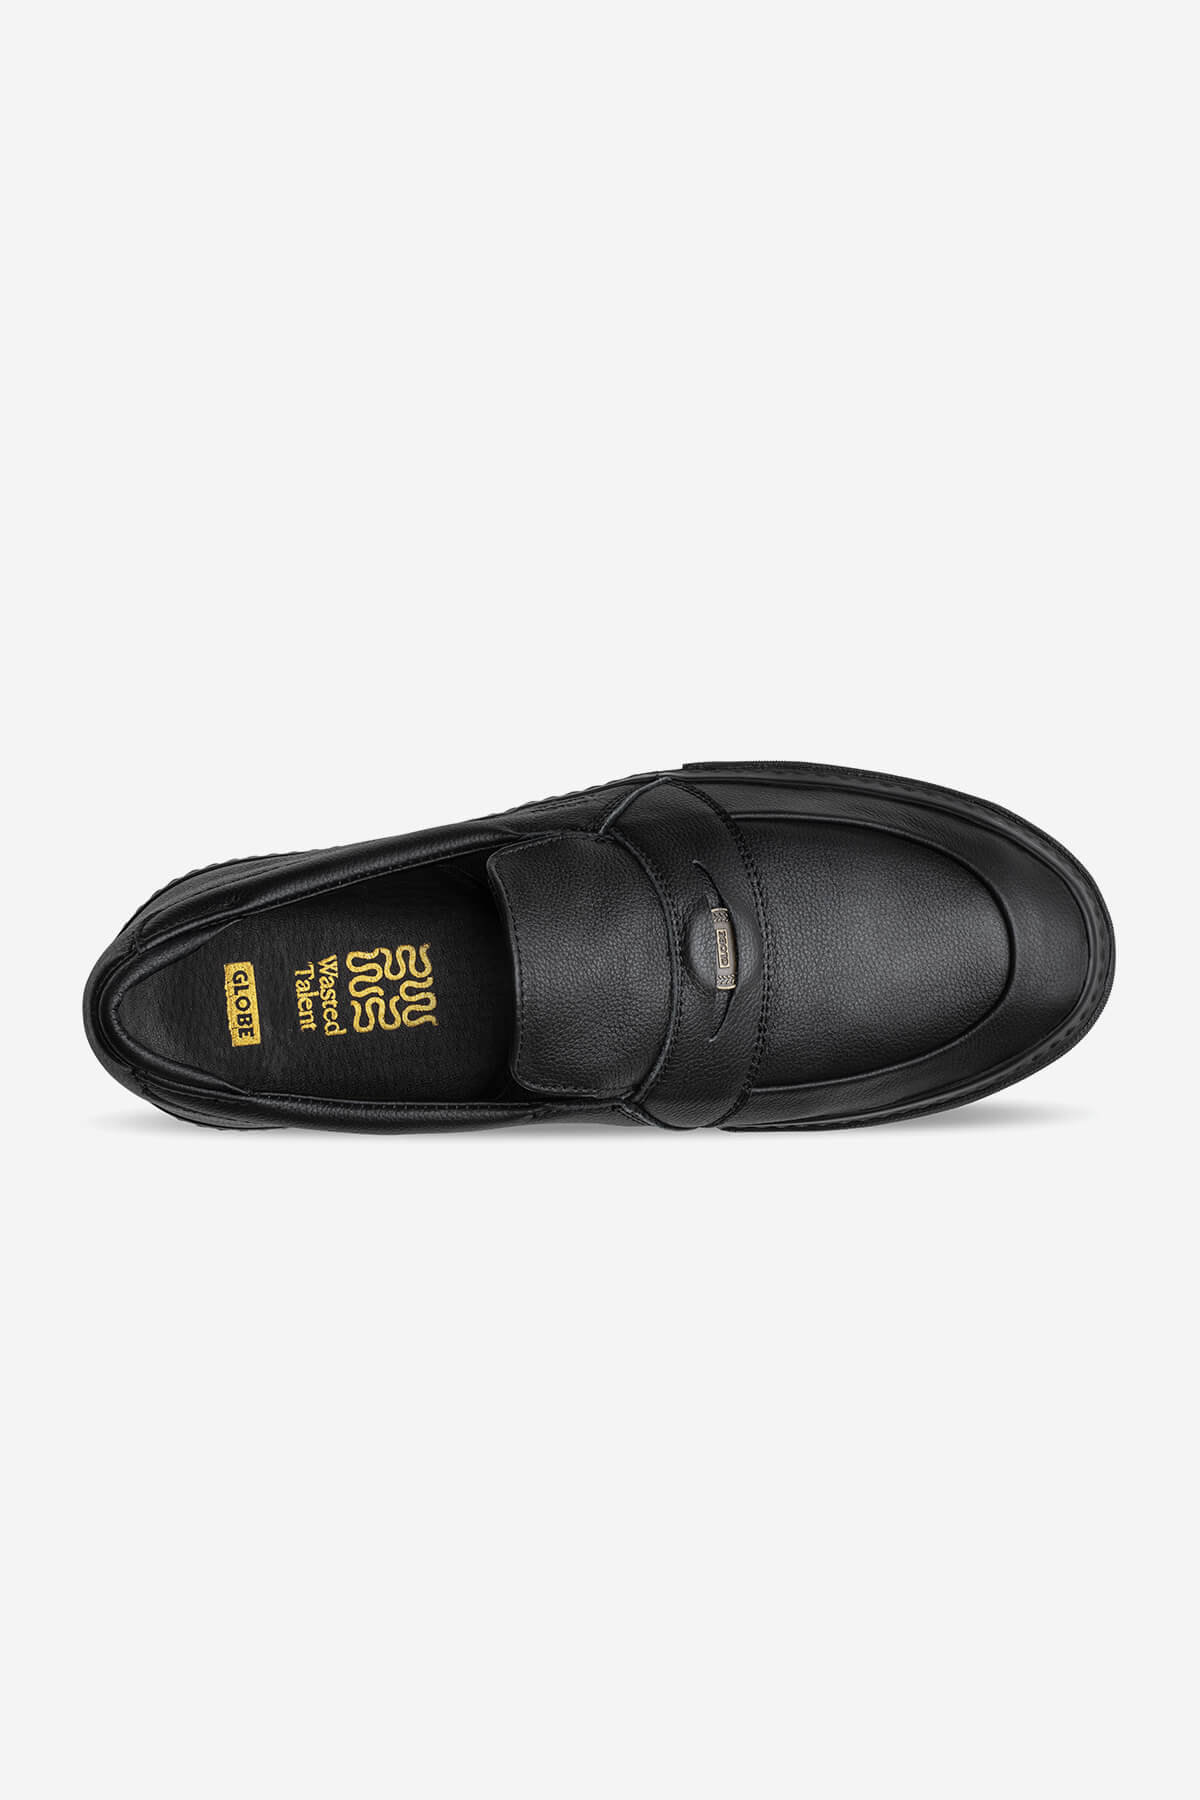 Globe - Liaizon - Black/Wasted Talent - skateboard Chaussures